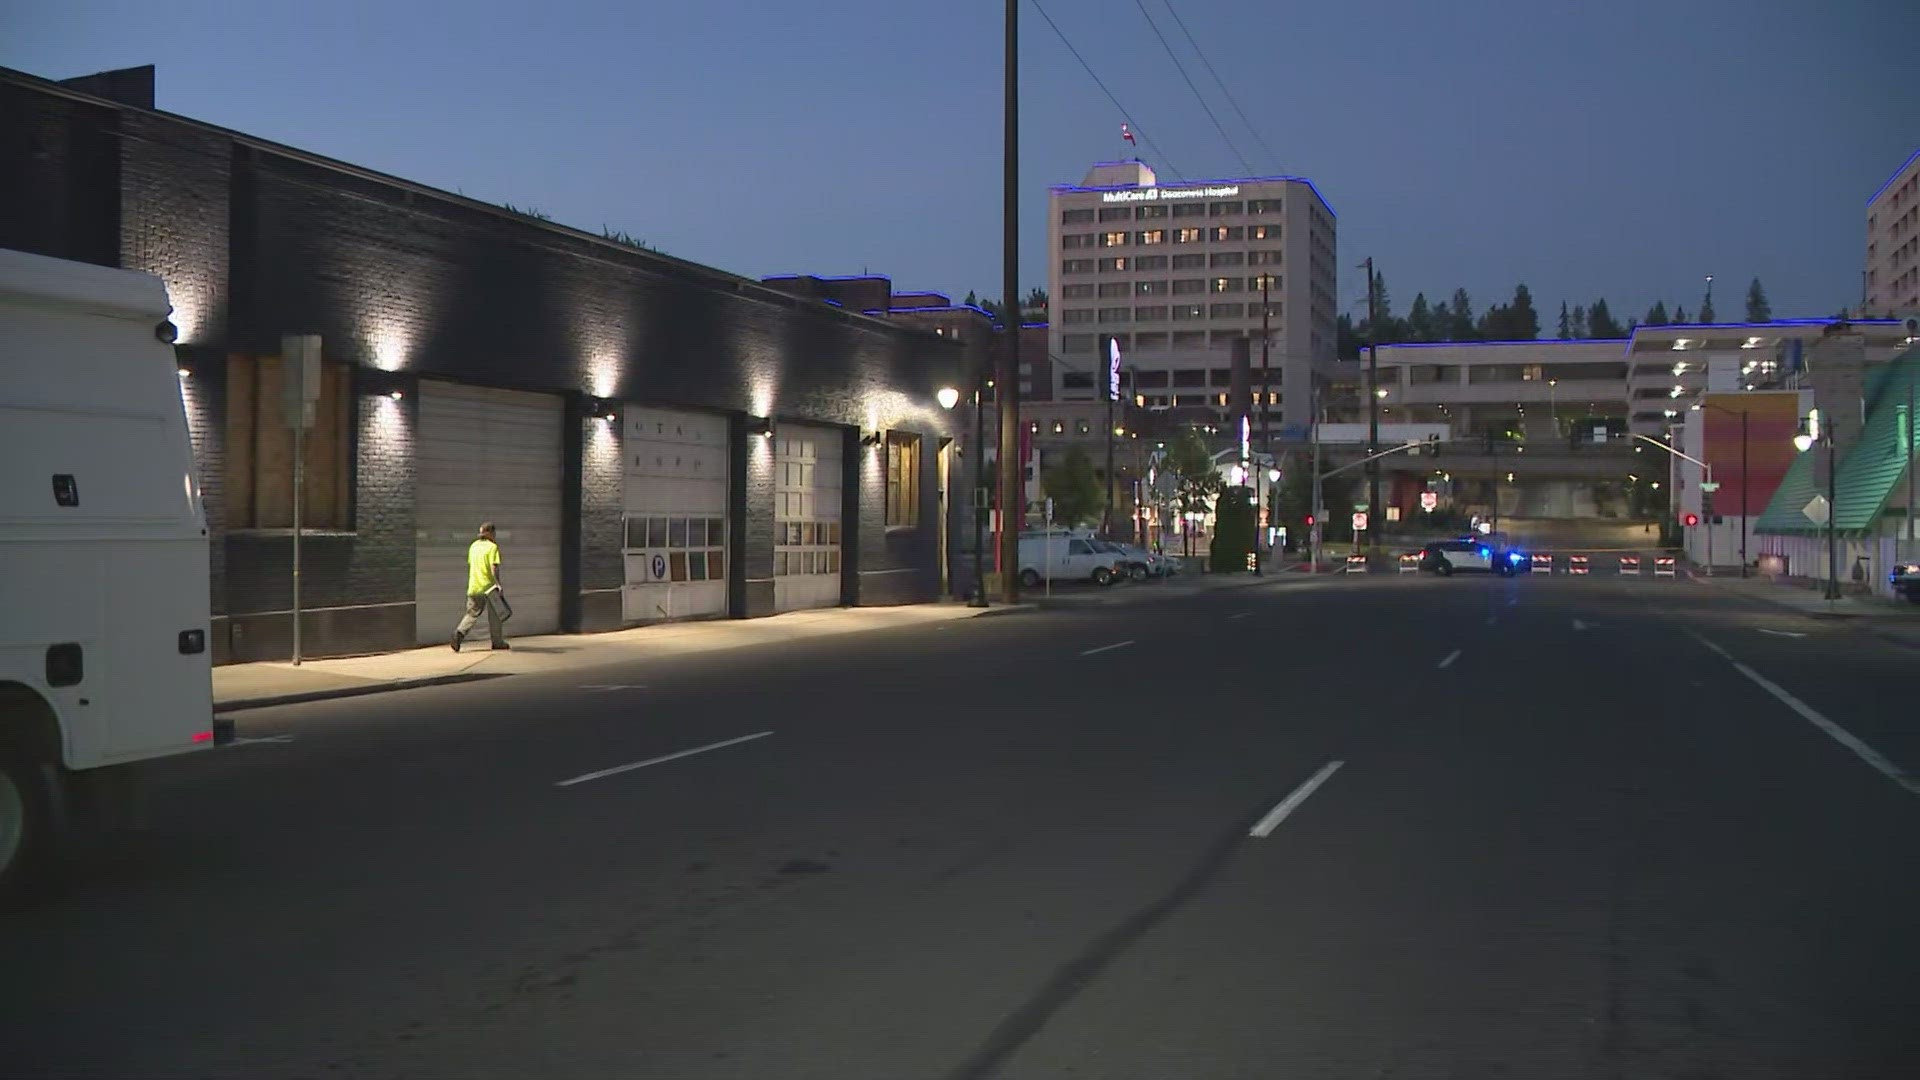 Spokane police, SWAT and major crimes investigators are all on scene investigating what happened overnight.